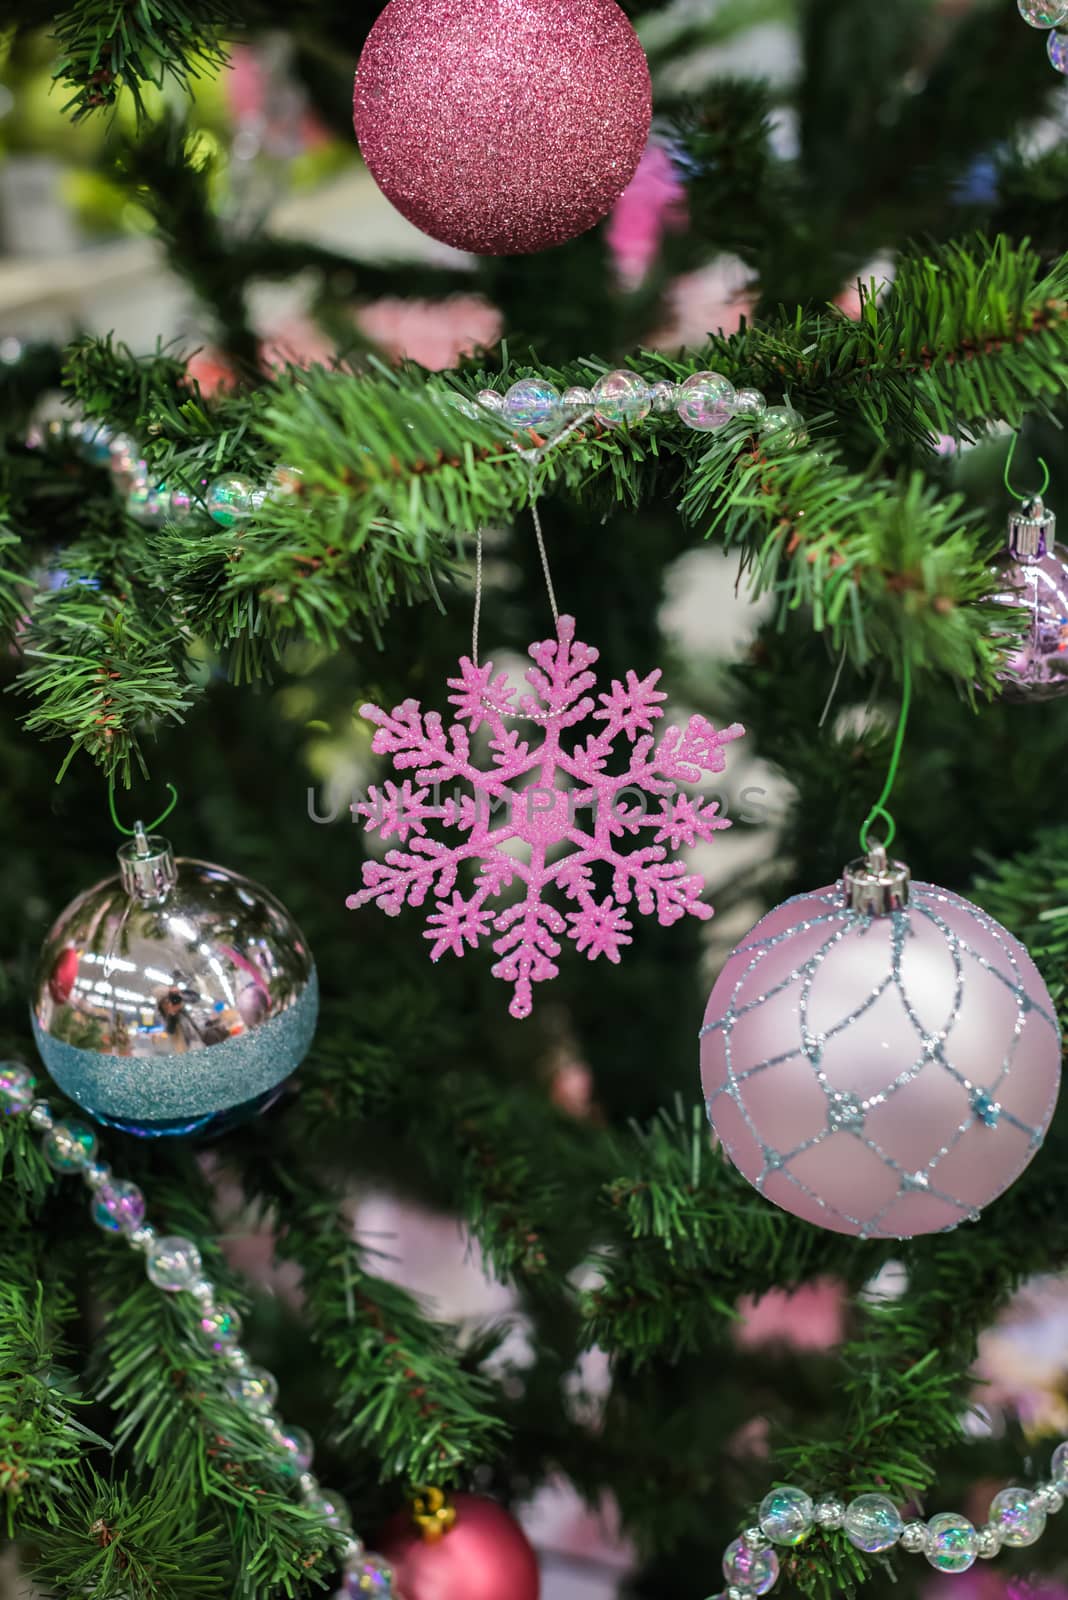 Christmas decorations on a Christmas tree. Christmas decorations like a snowflake